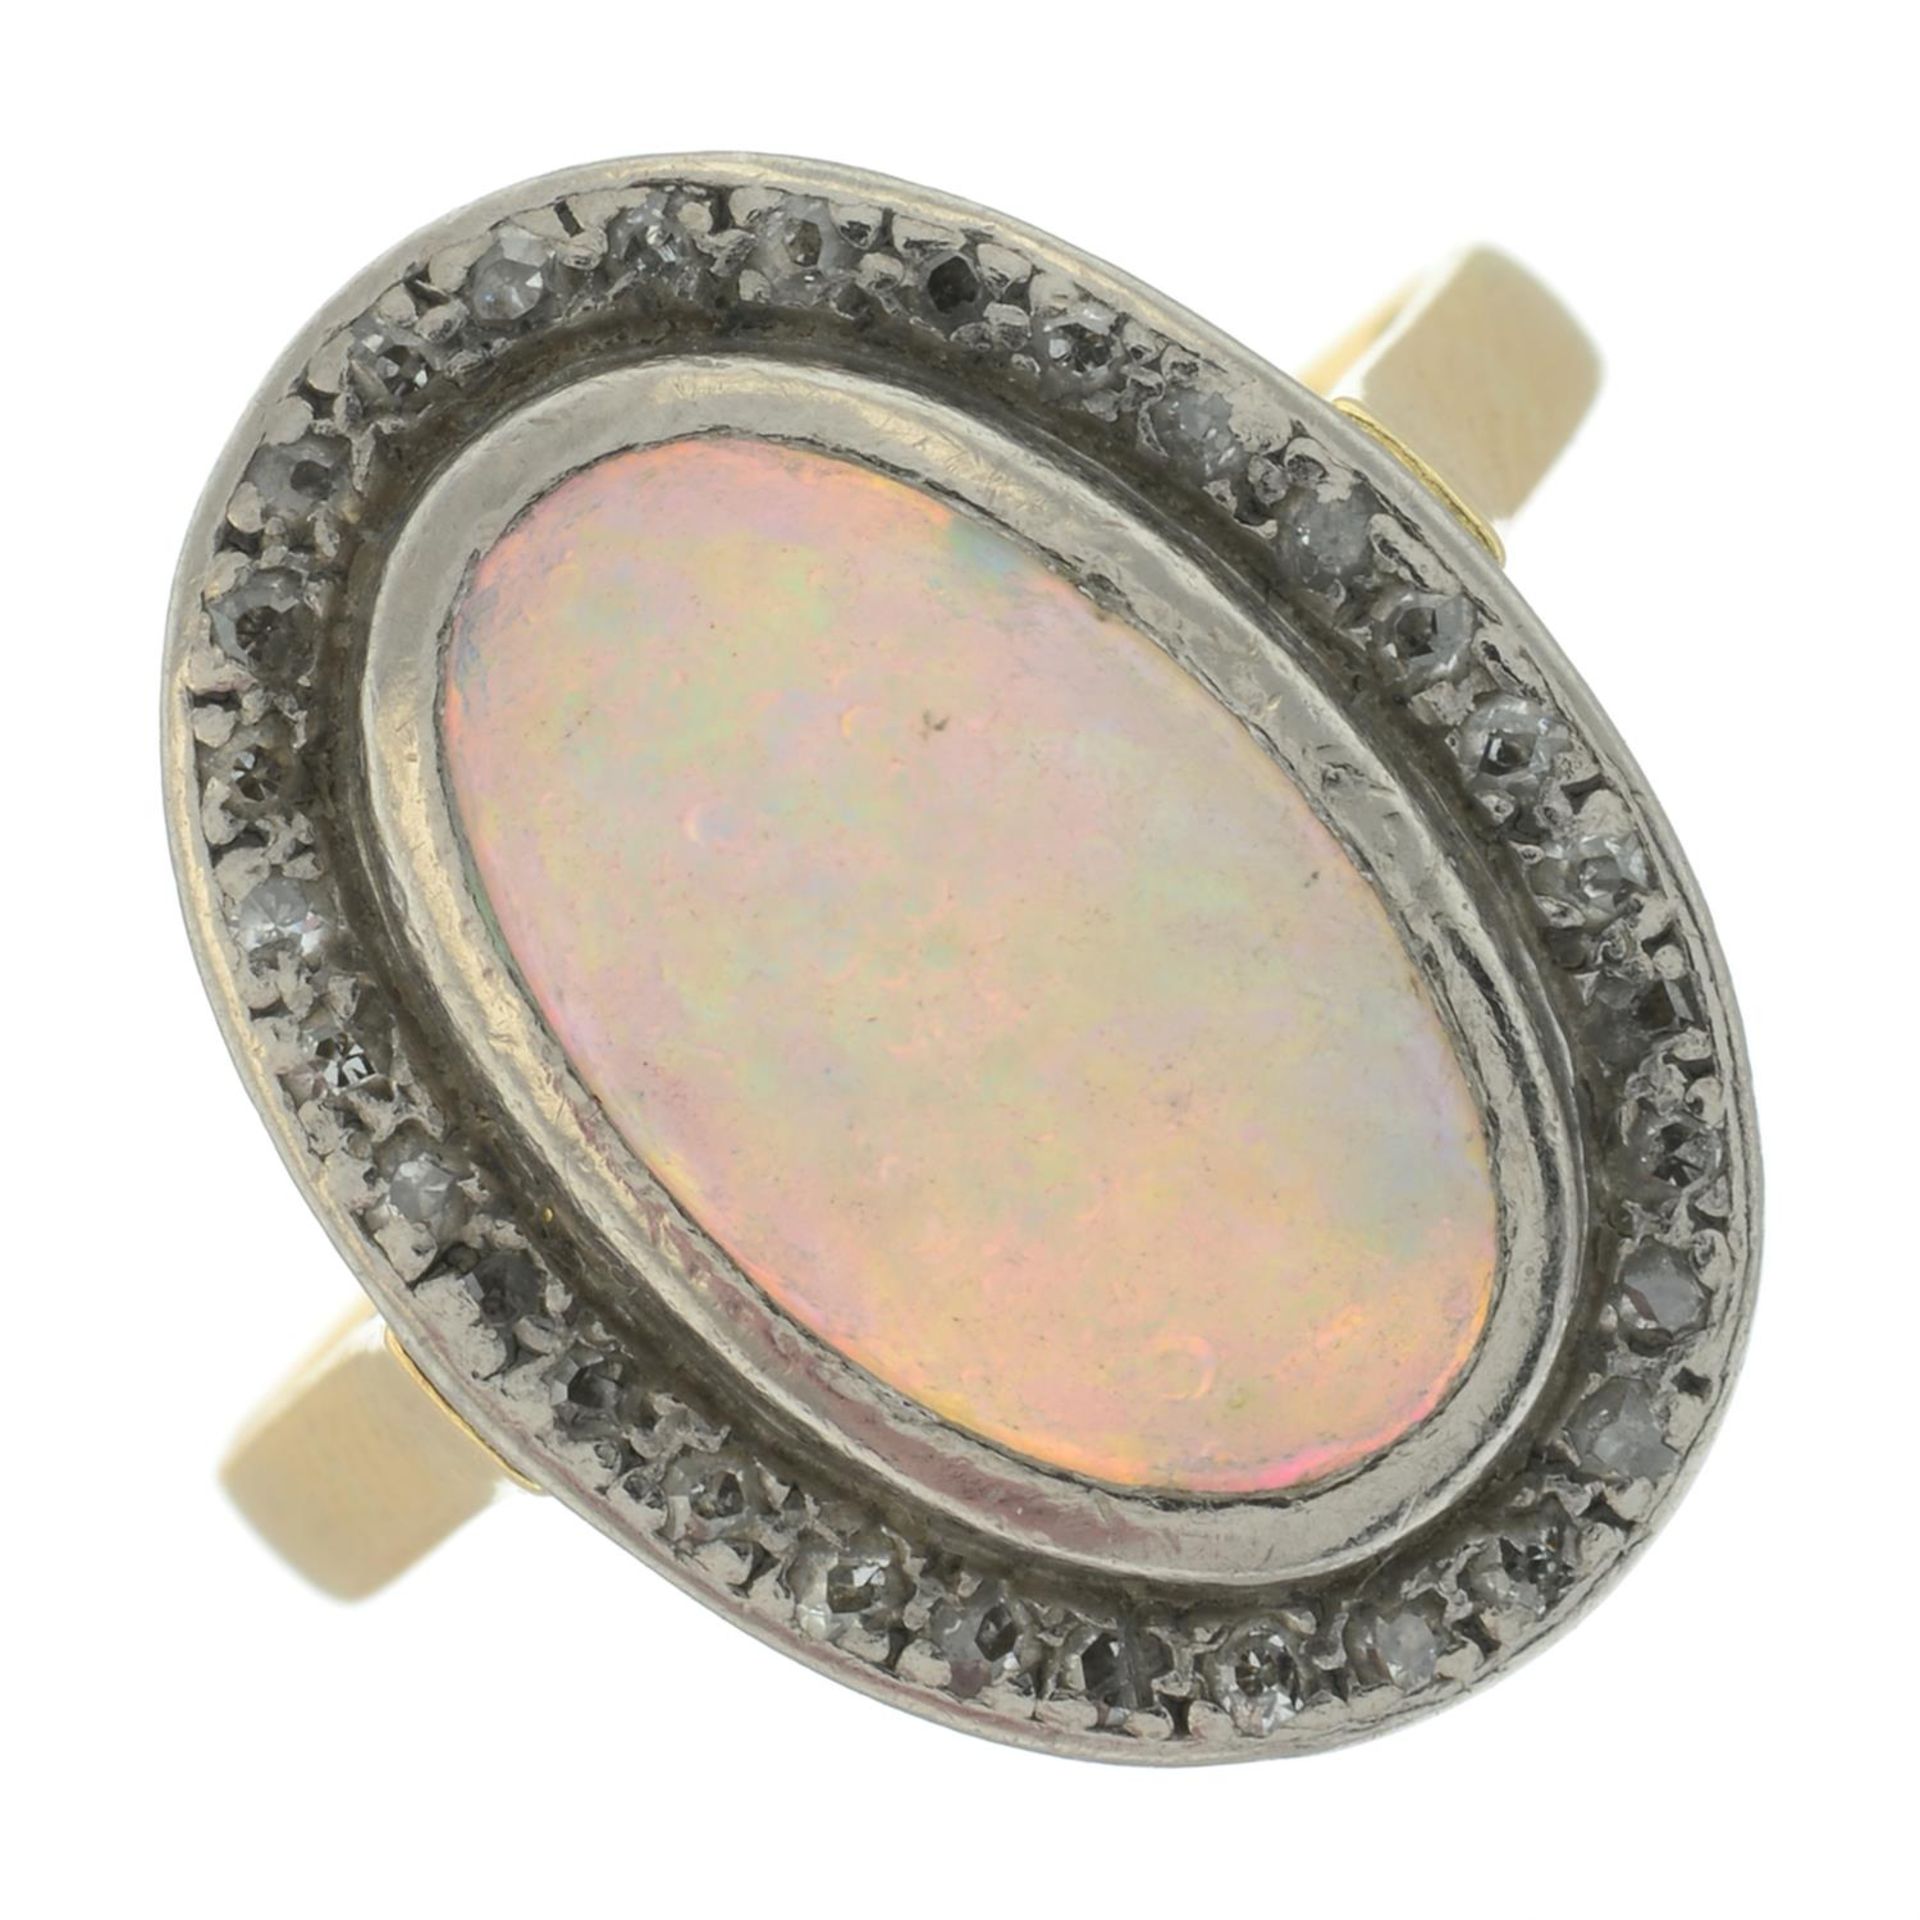 Opal & diamond cluster ring